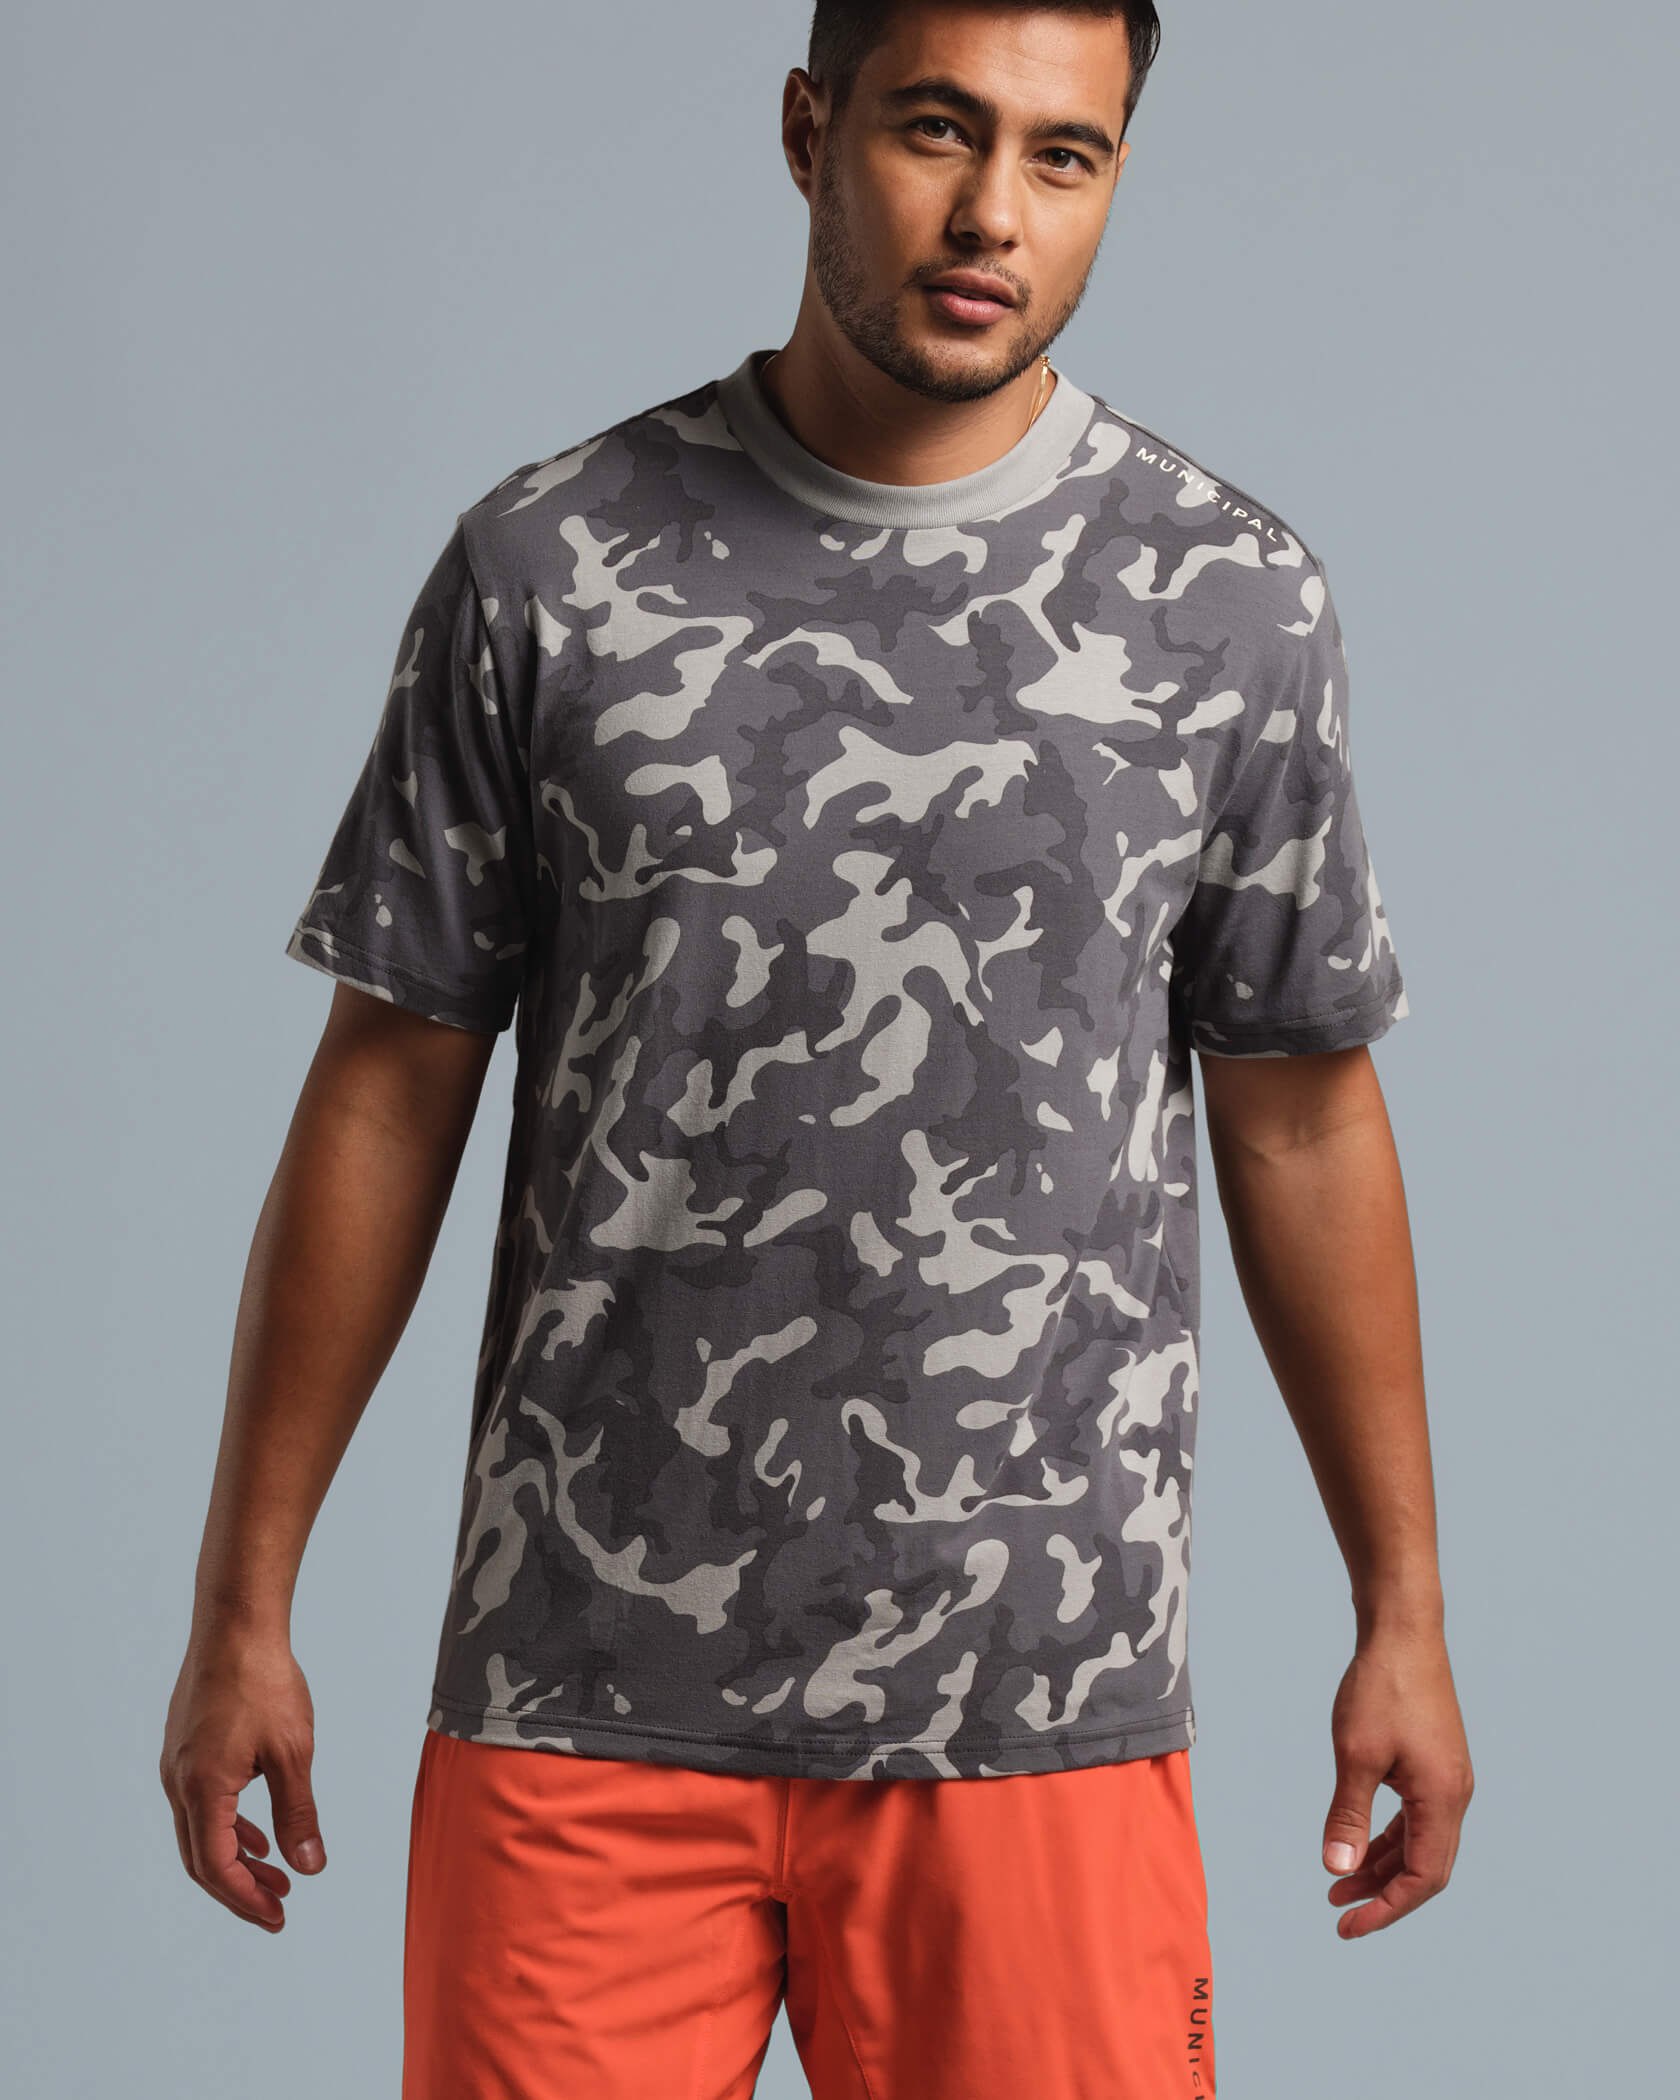 Enduro Stretch T-Shirt |Charcoal Camo| front